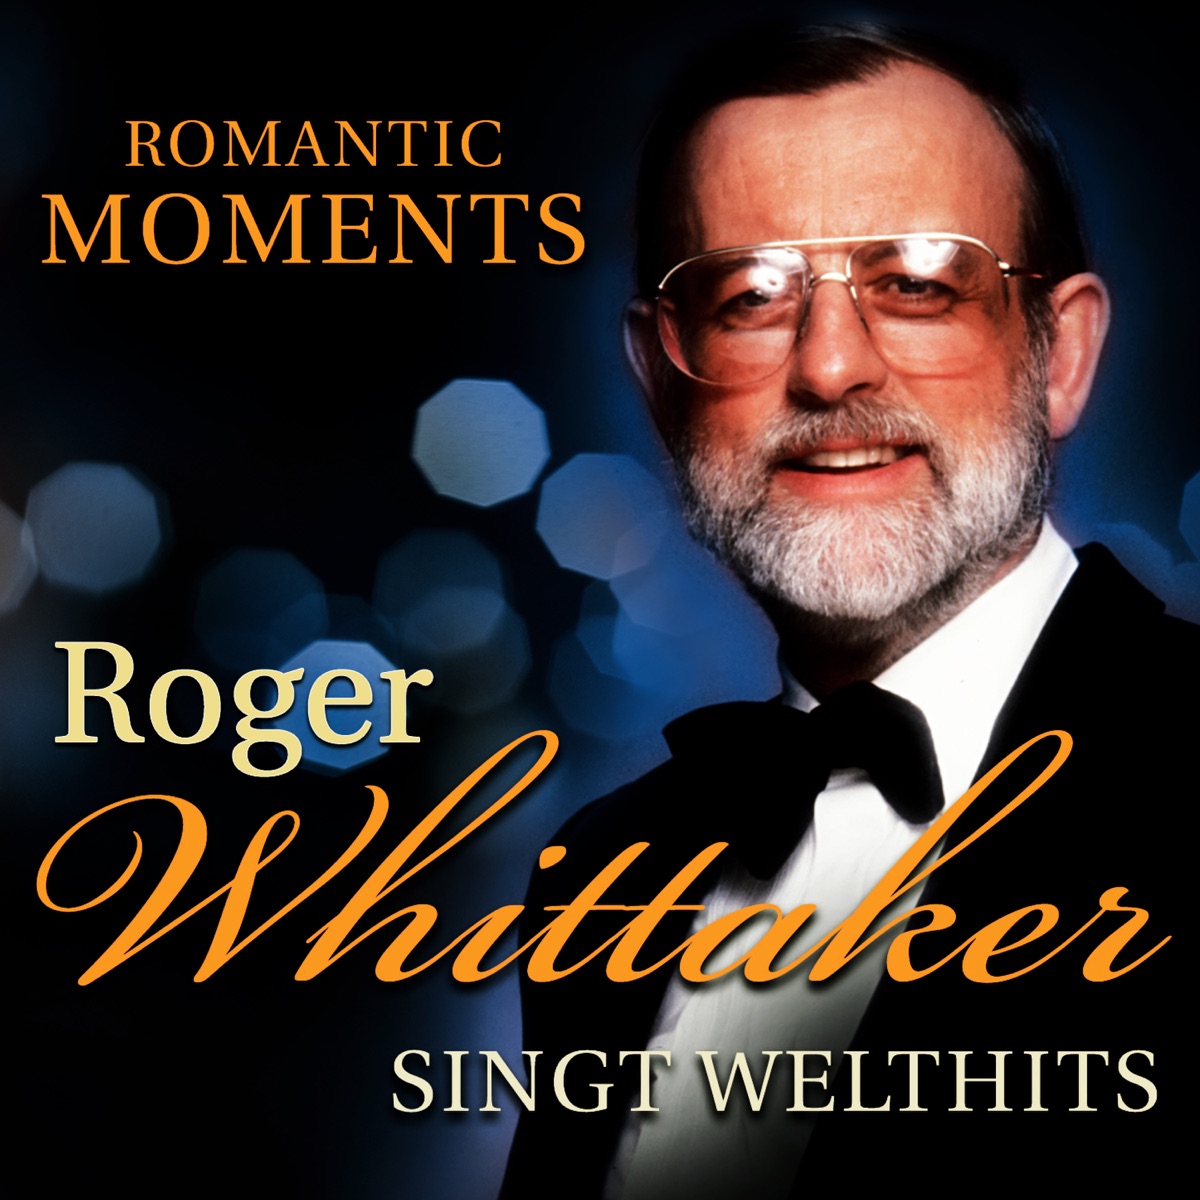 Romantic Memories - Roger Whittaker singt Welthits – Album von Roger  Whittaker – Apple Music